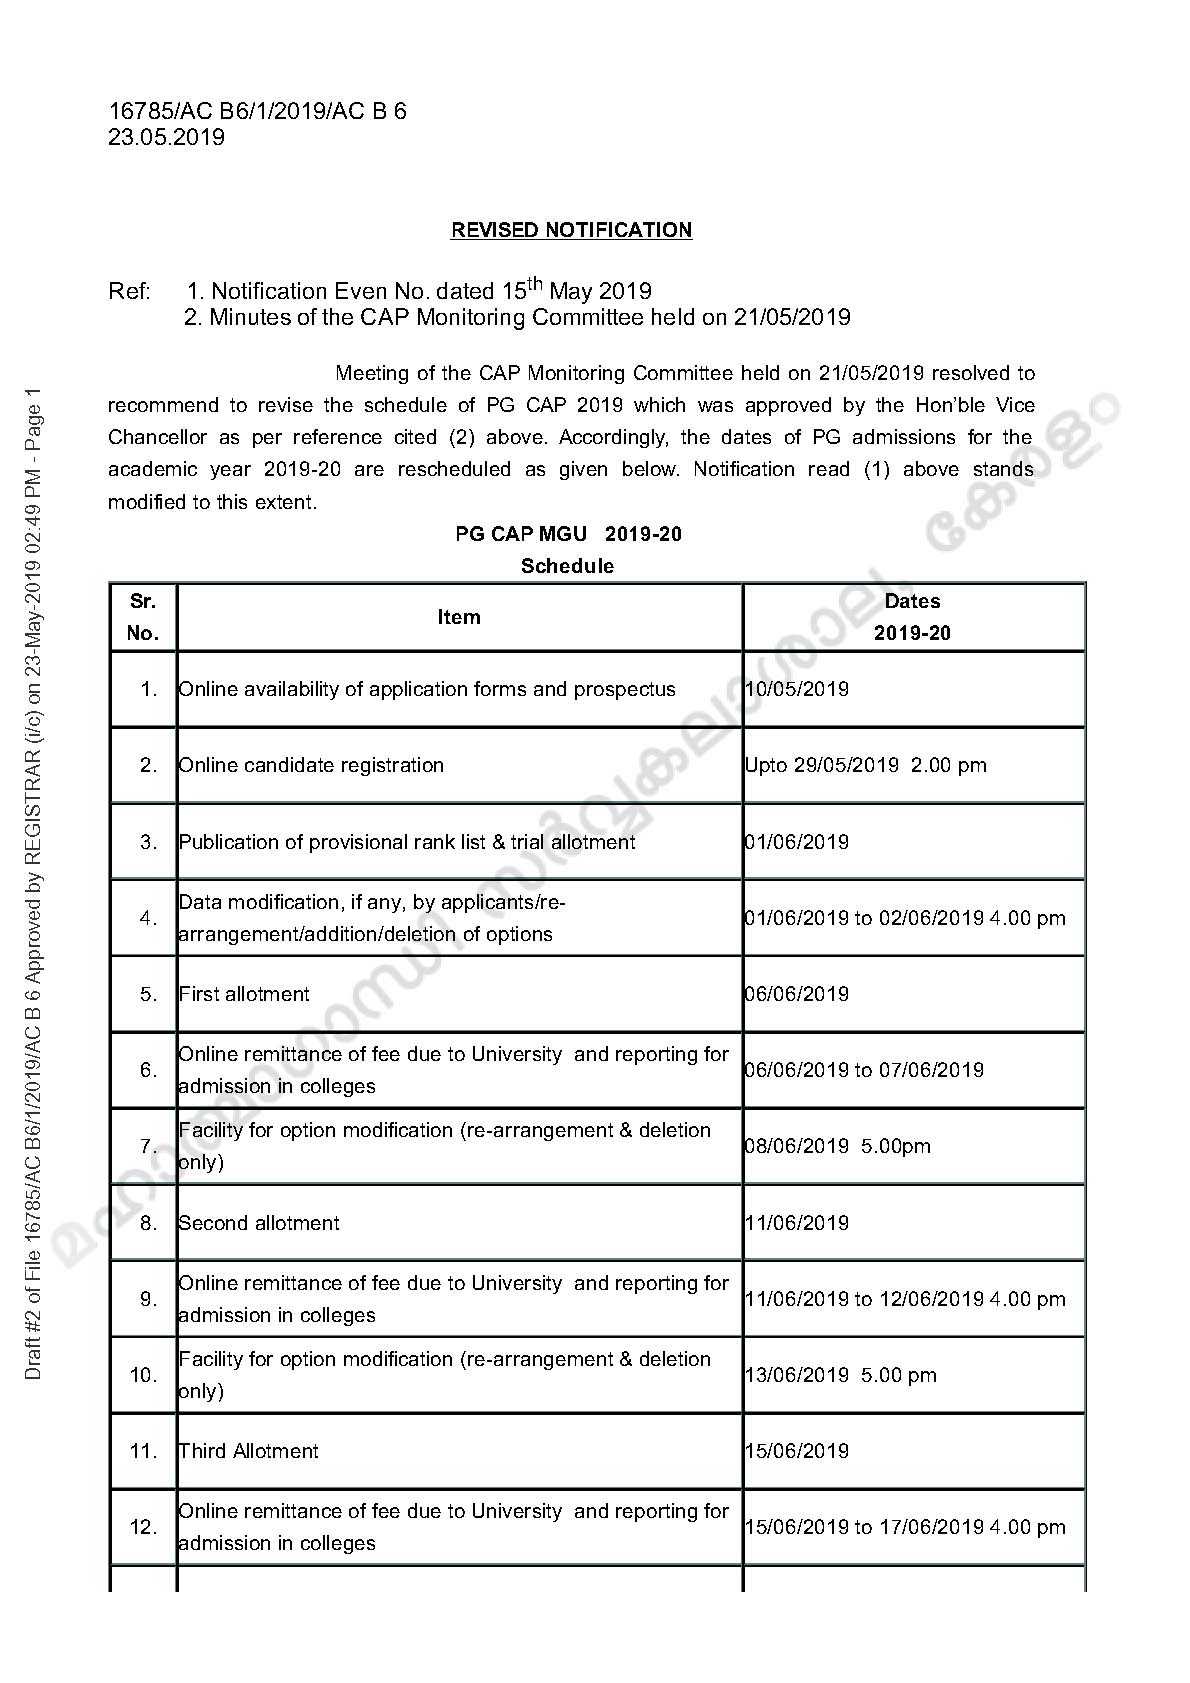 MG University Kerala Admission Schedule 2019 2020 - Notification Image 1